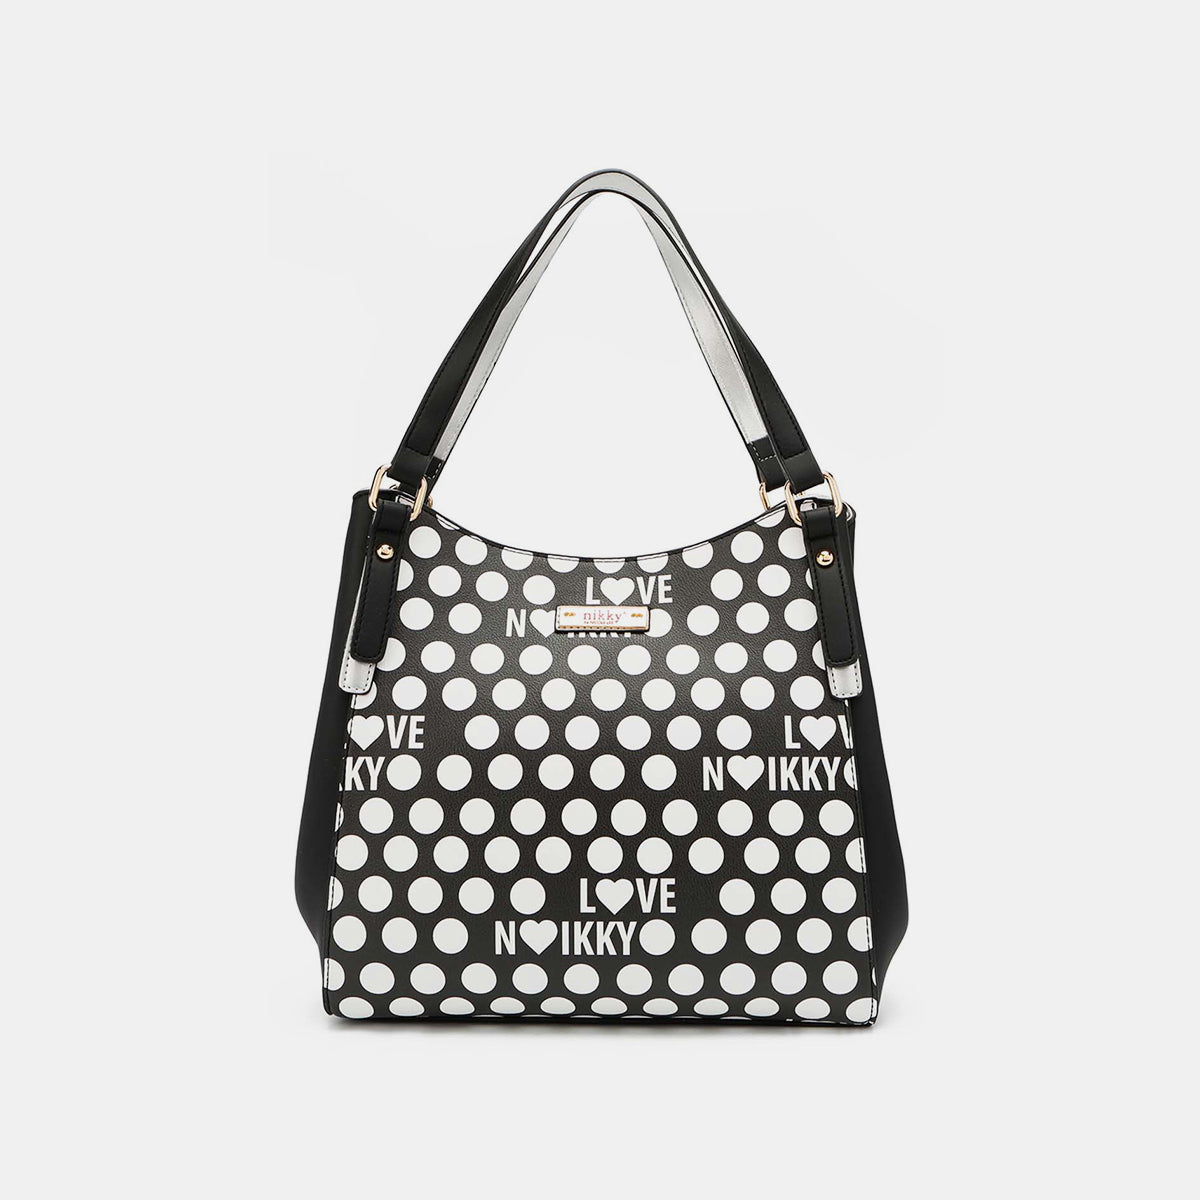 Nicole Lee USA Contrast Polka Dot Handbag Black One Size 